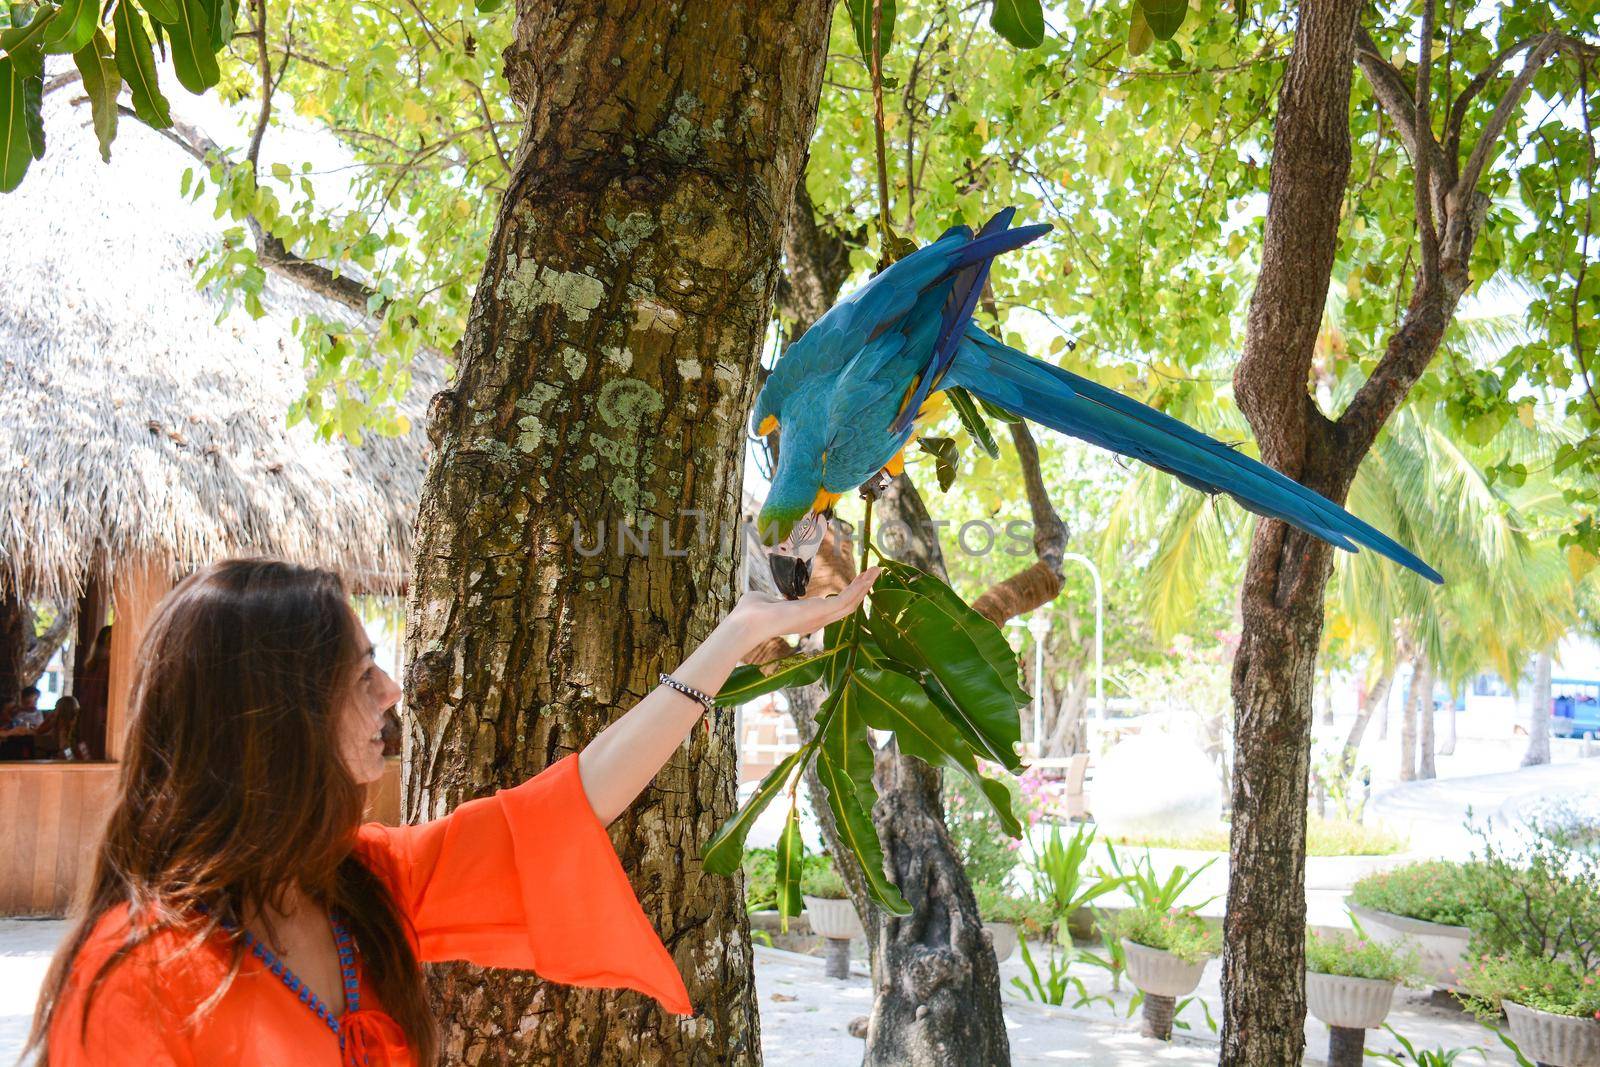 parrots feeding by iacobino